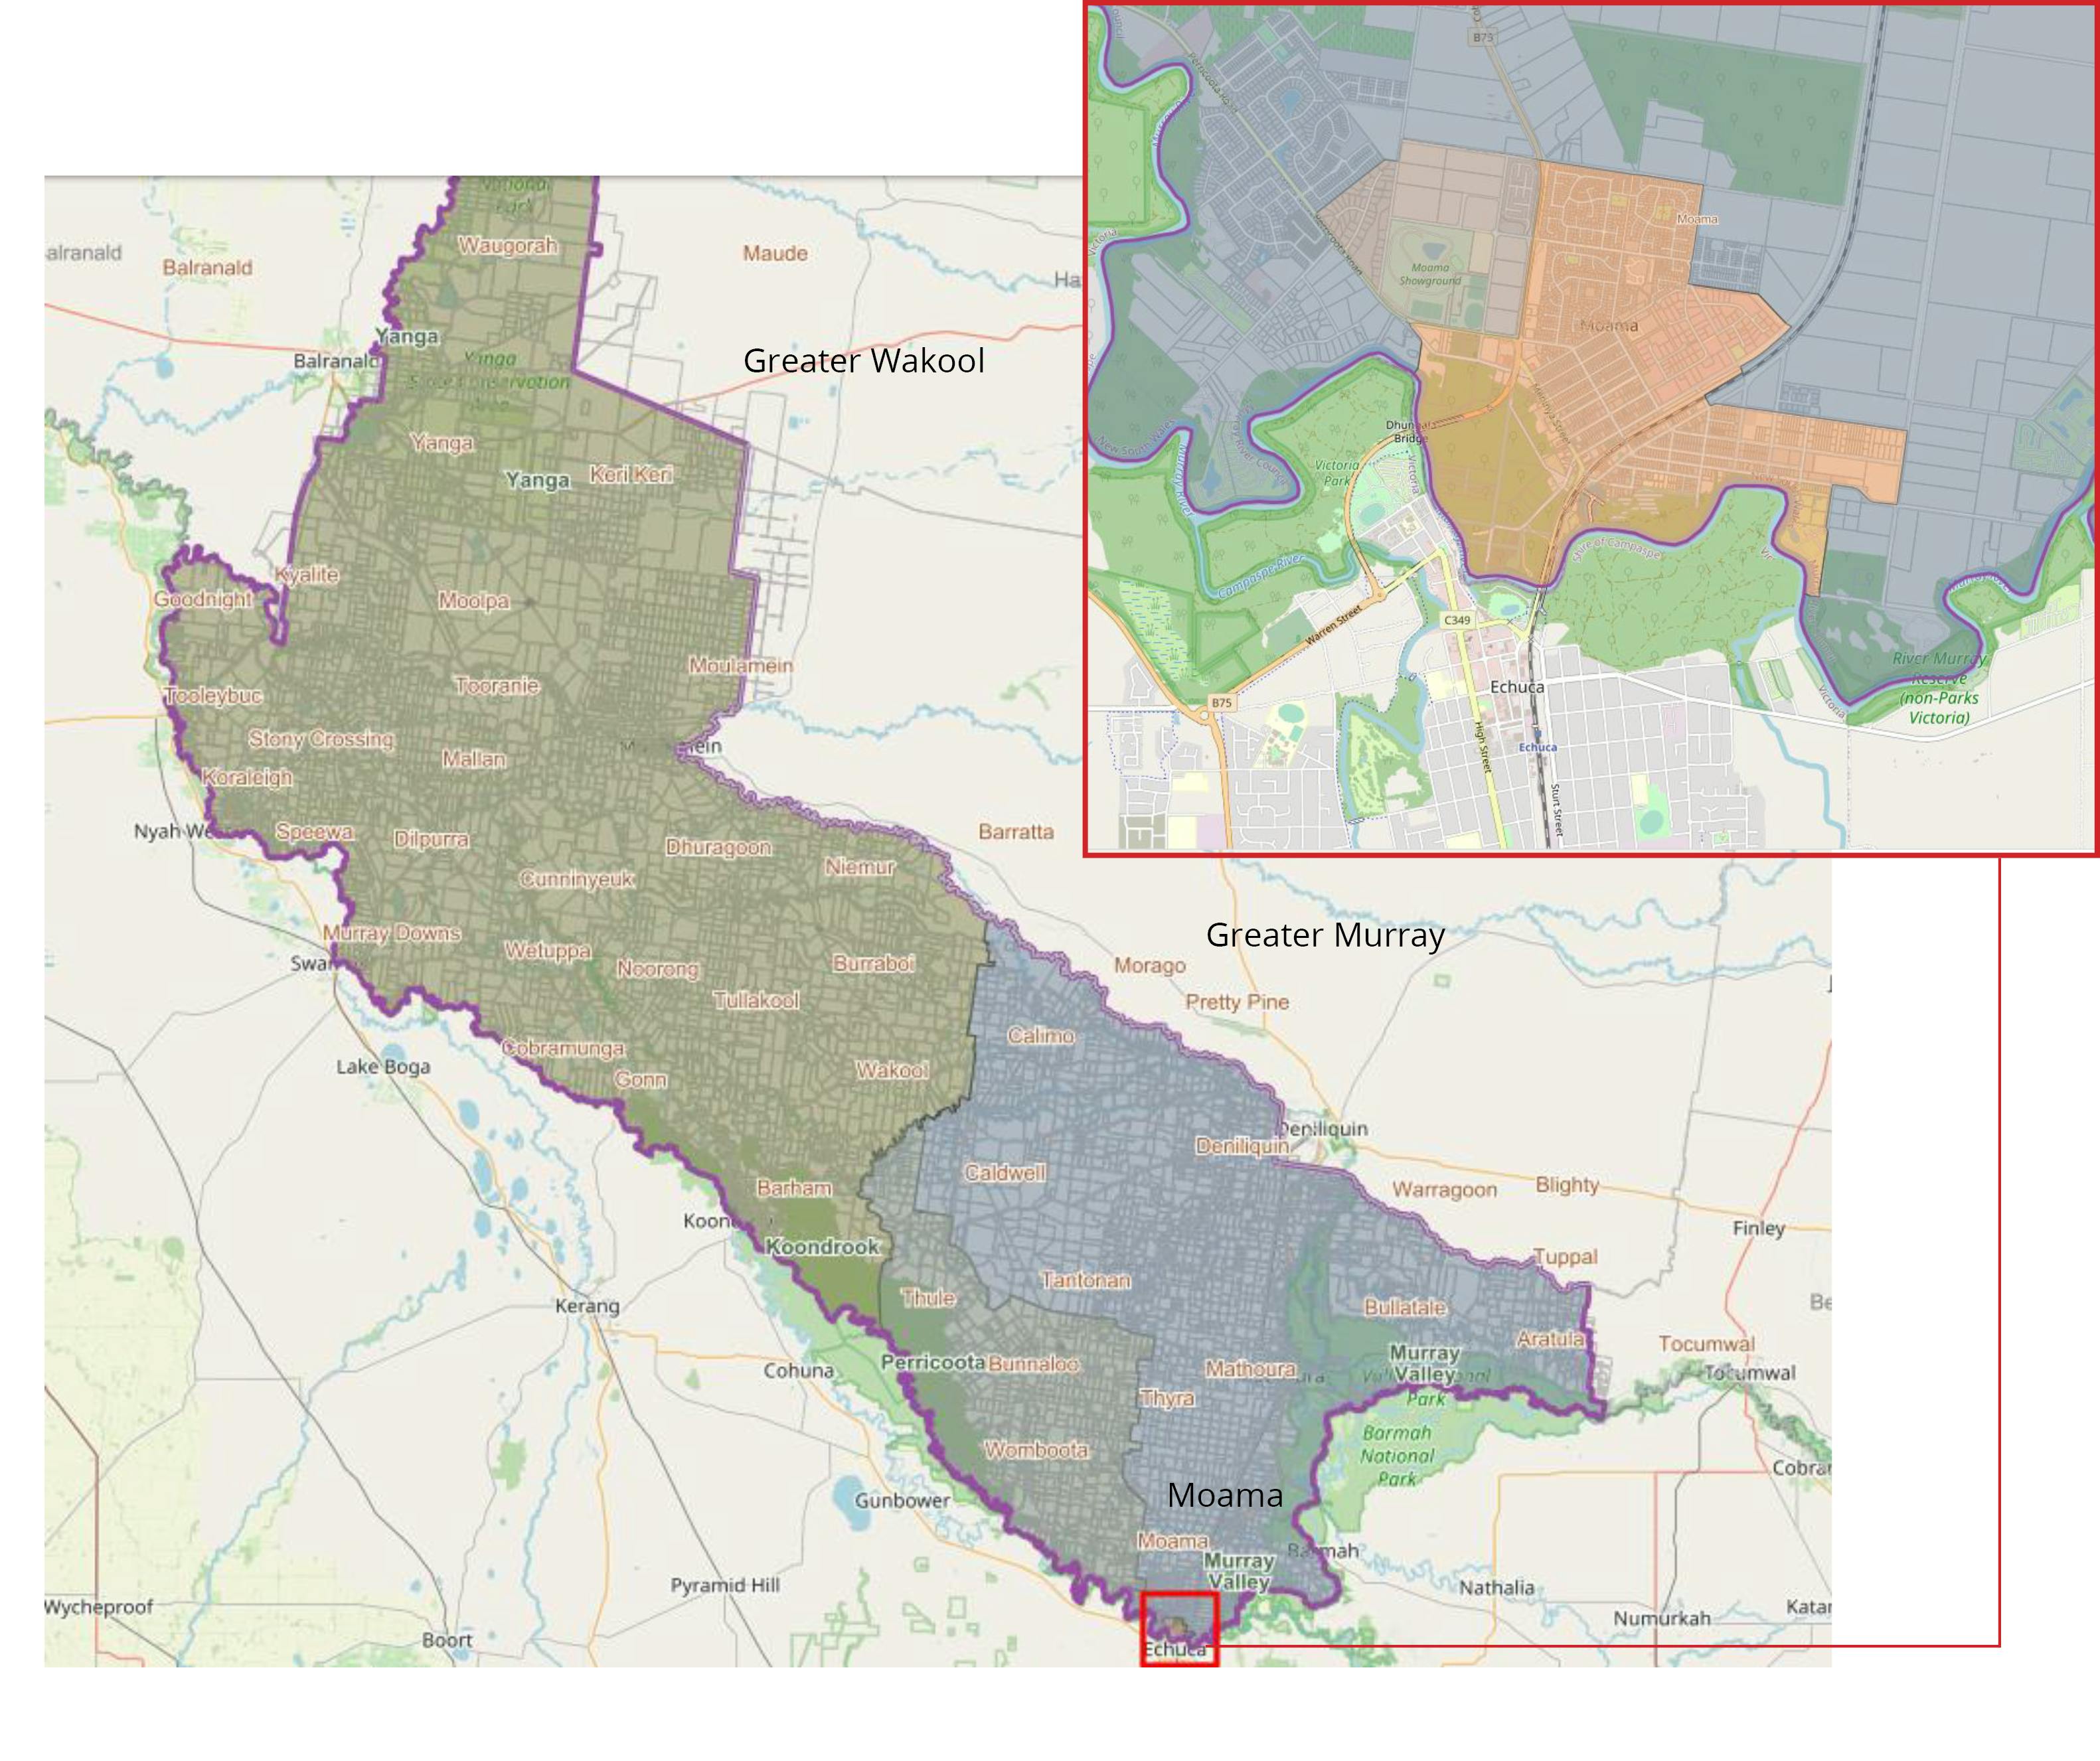 UPDATED Electoral Ward boundaries